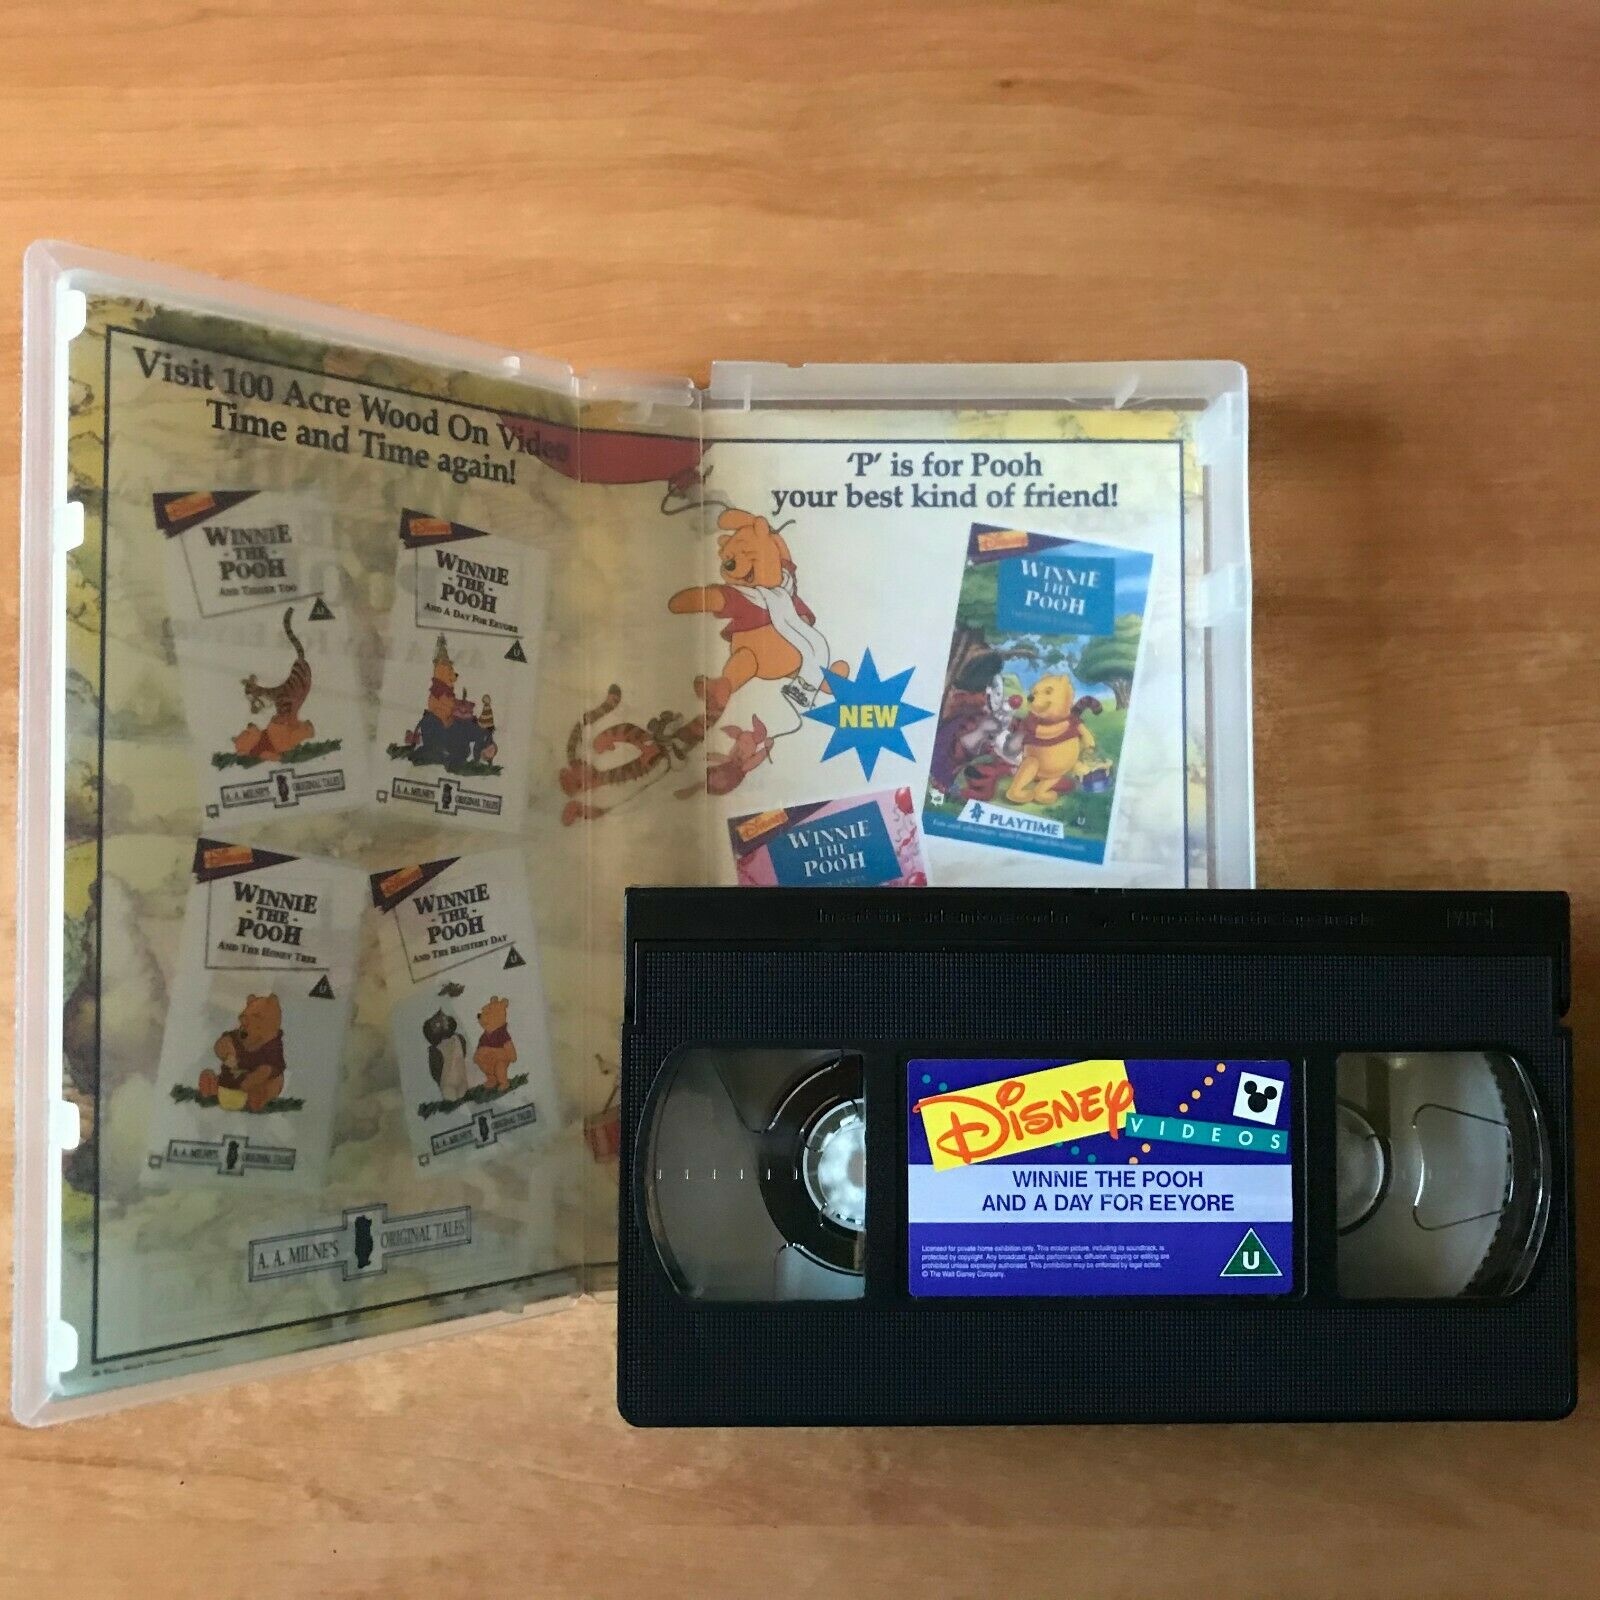 Winnie The Pooh: A Day For Eeyore [Walt Disney] A. A. Milne - Children's - VHS-